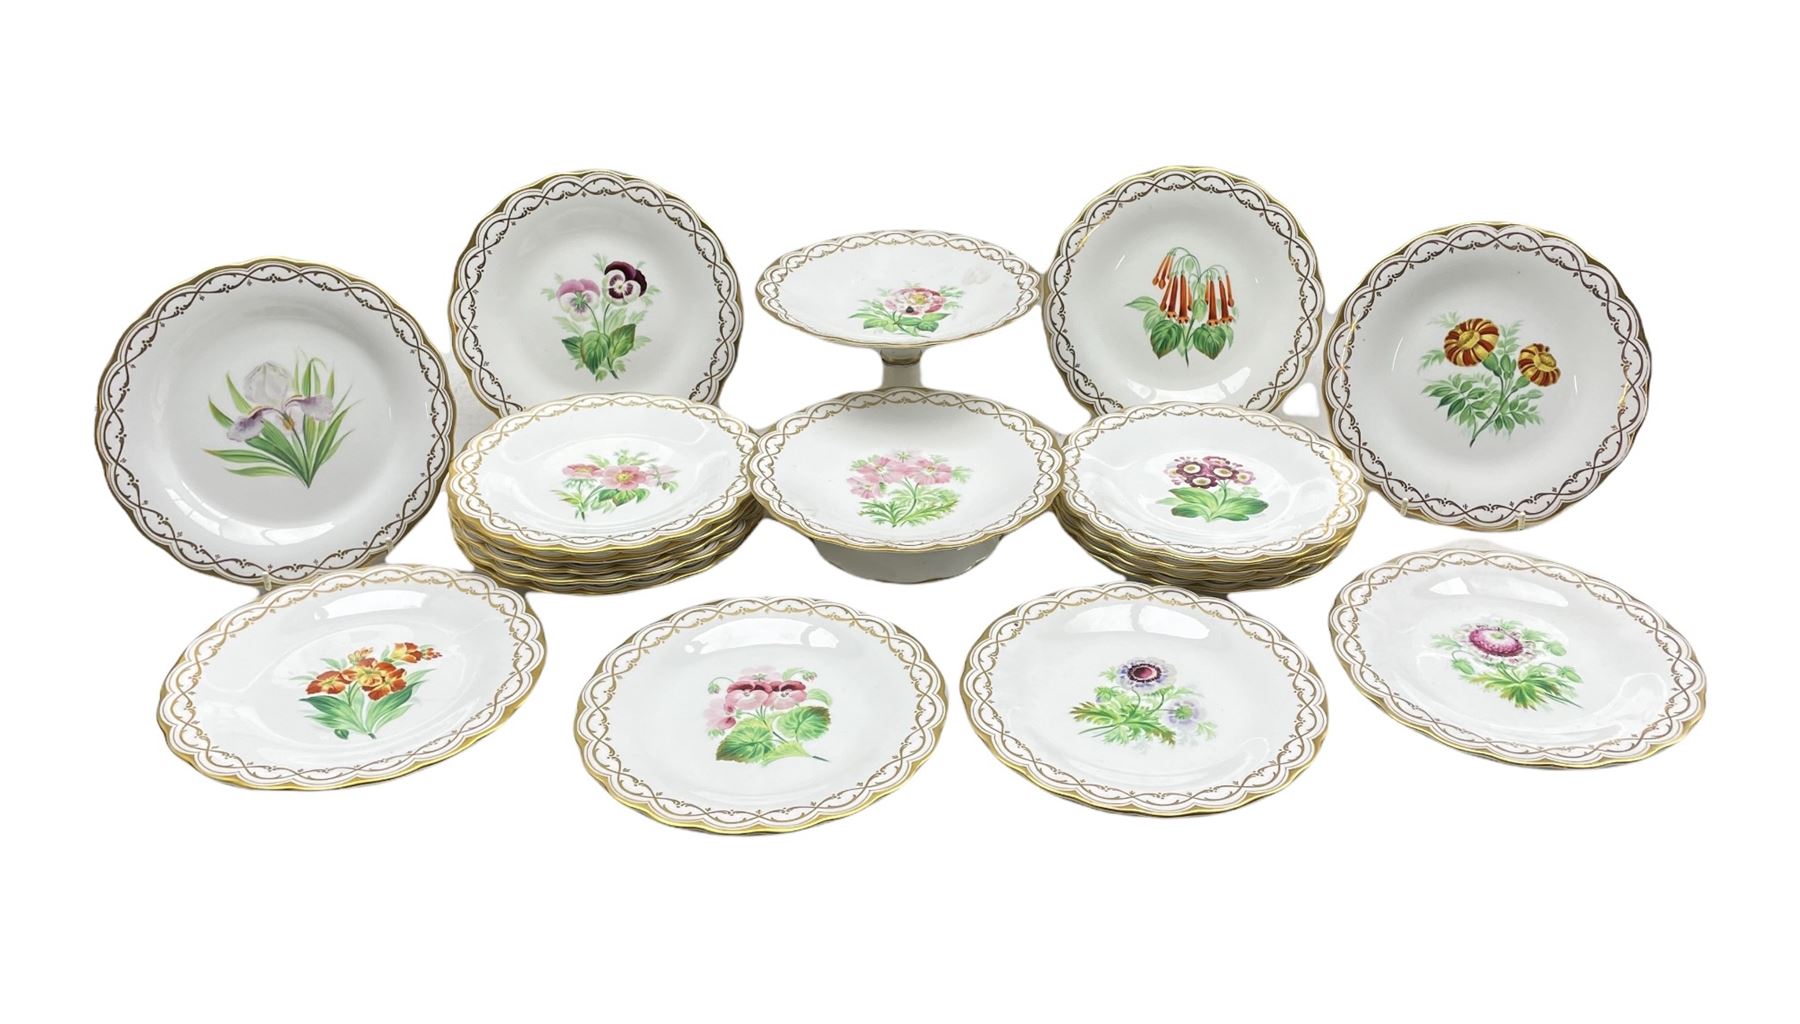 19th century English porcelain Botanical dessert service